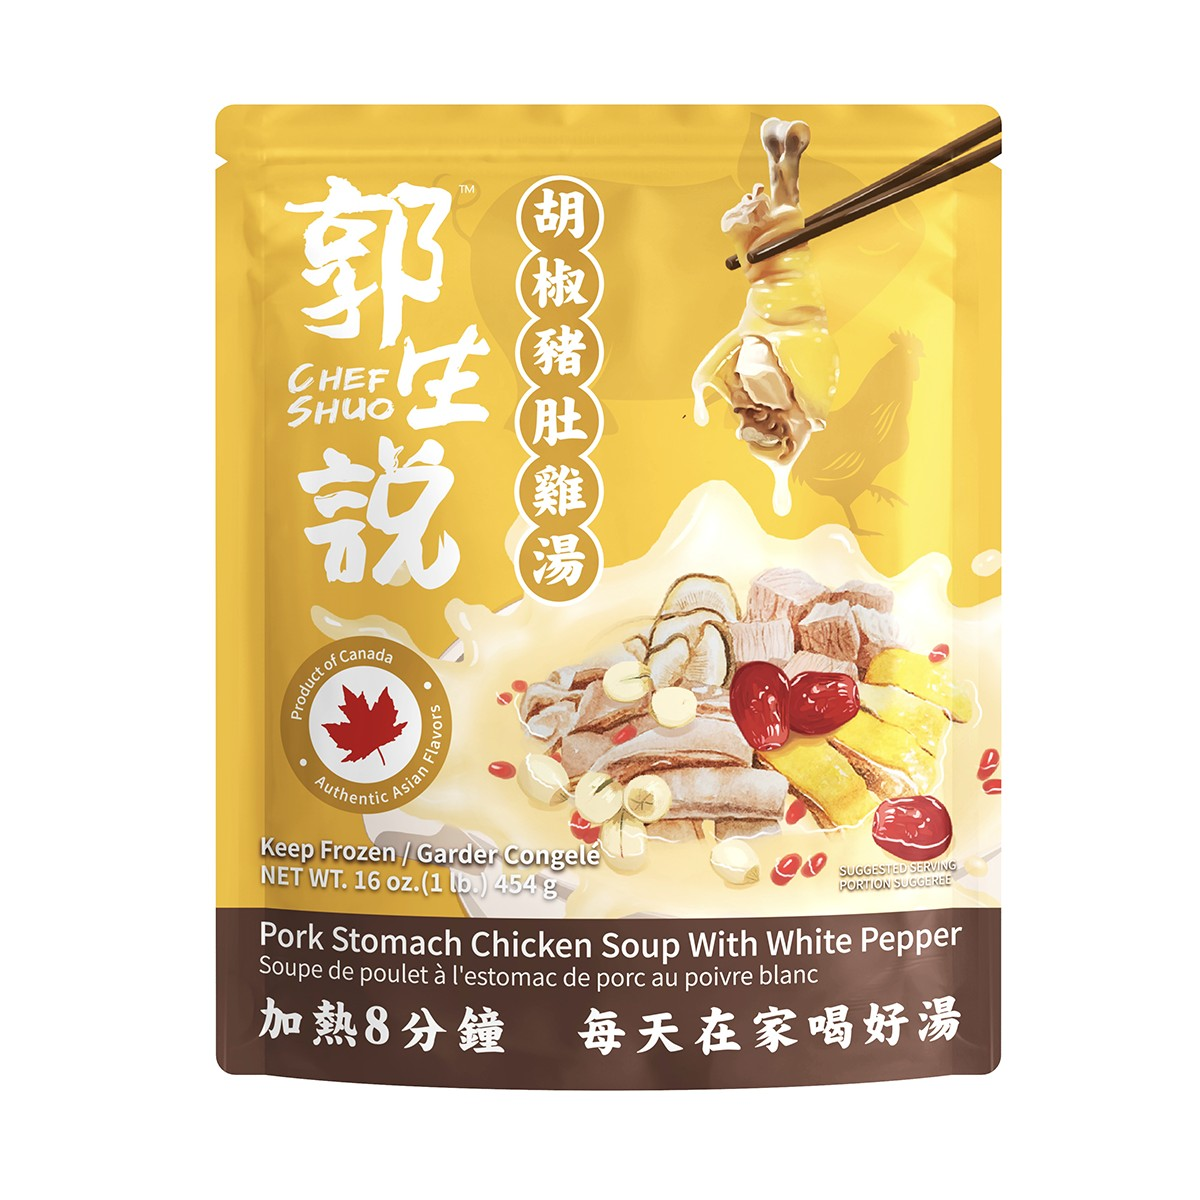 Chefshuo pork stomach chicken soup with white pepper 胡椒猪肚鸡汤 454g